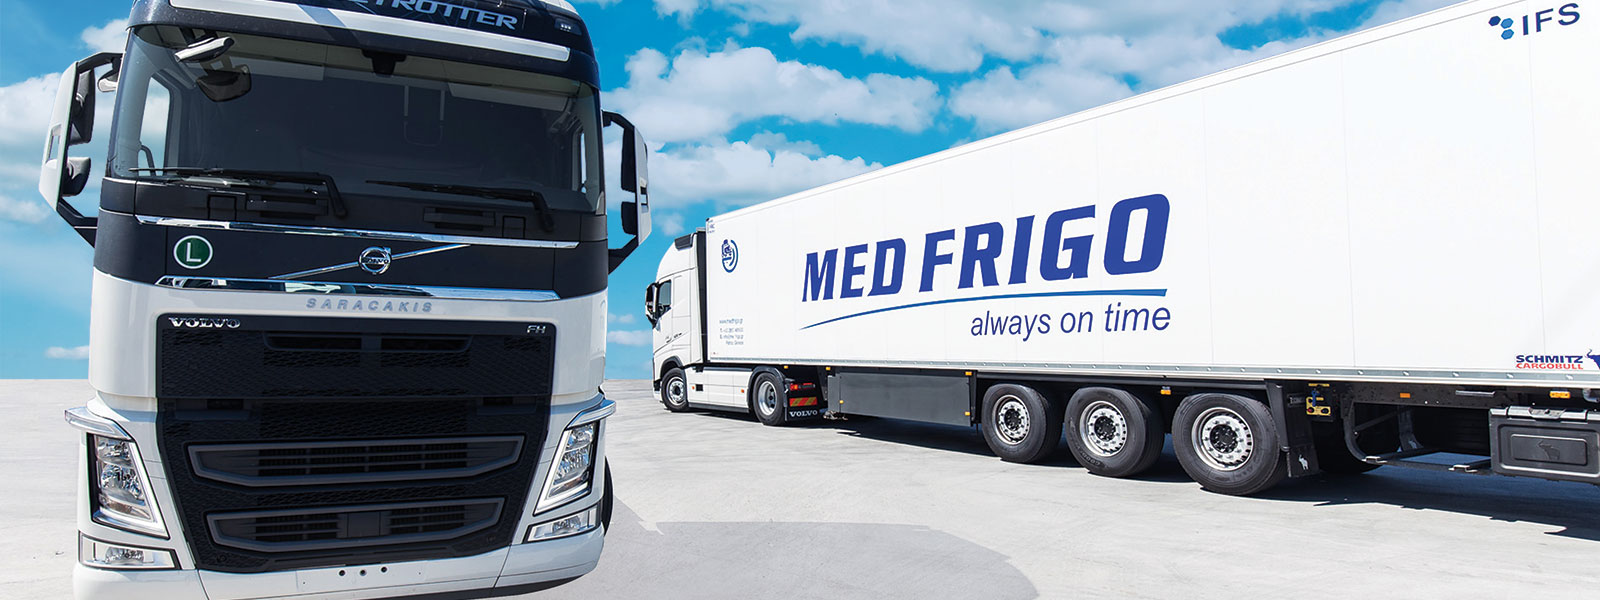 Med Frigo: Aνακοινώθηκε η εξαγορά του ομίλου από τις Εlikonos, ΕΟS και Bearonem Limited